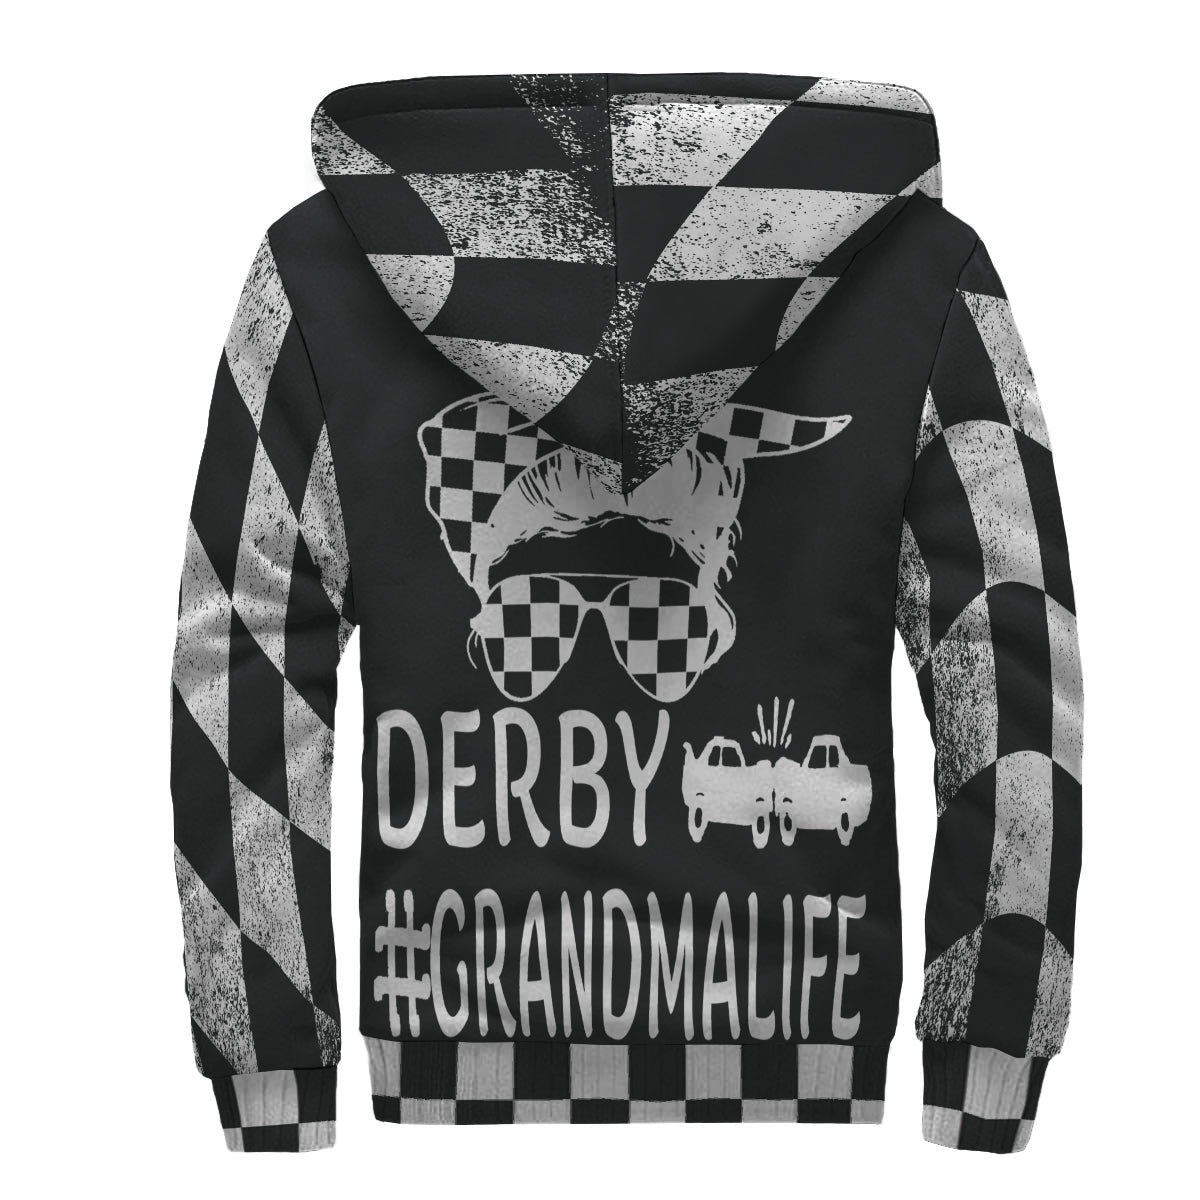 Demolition derby grandma jacket